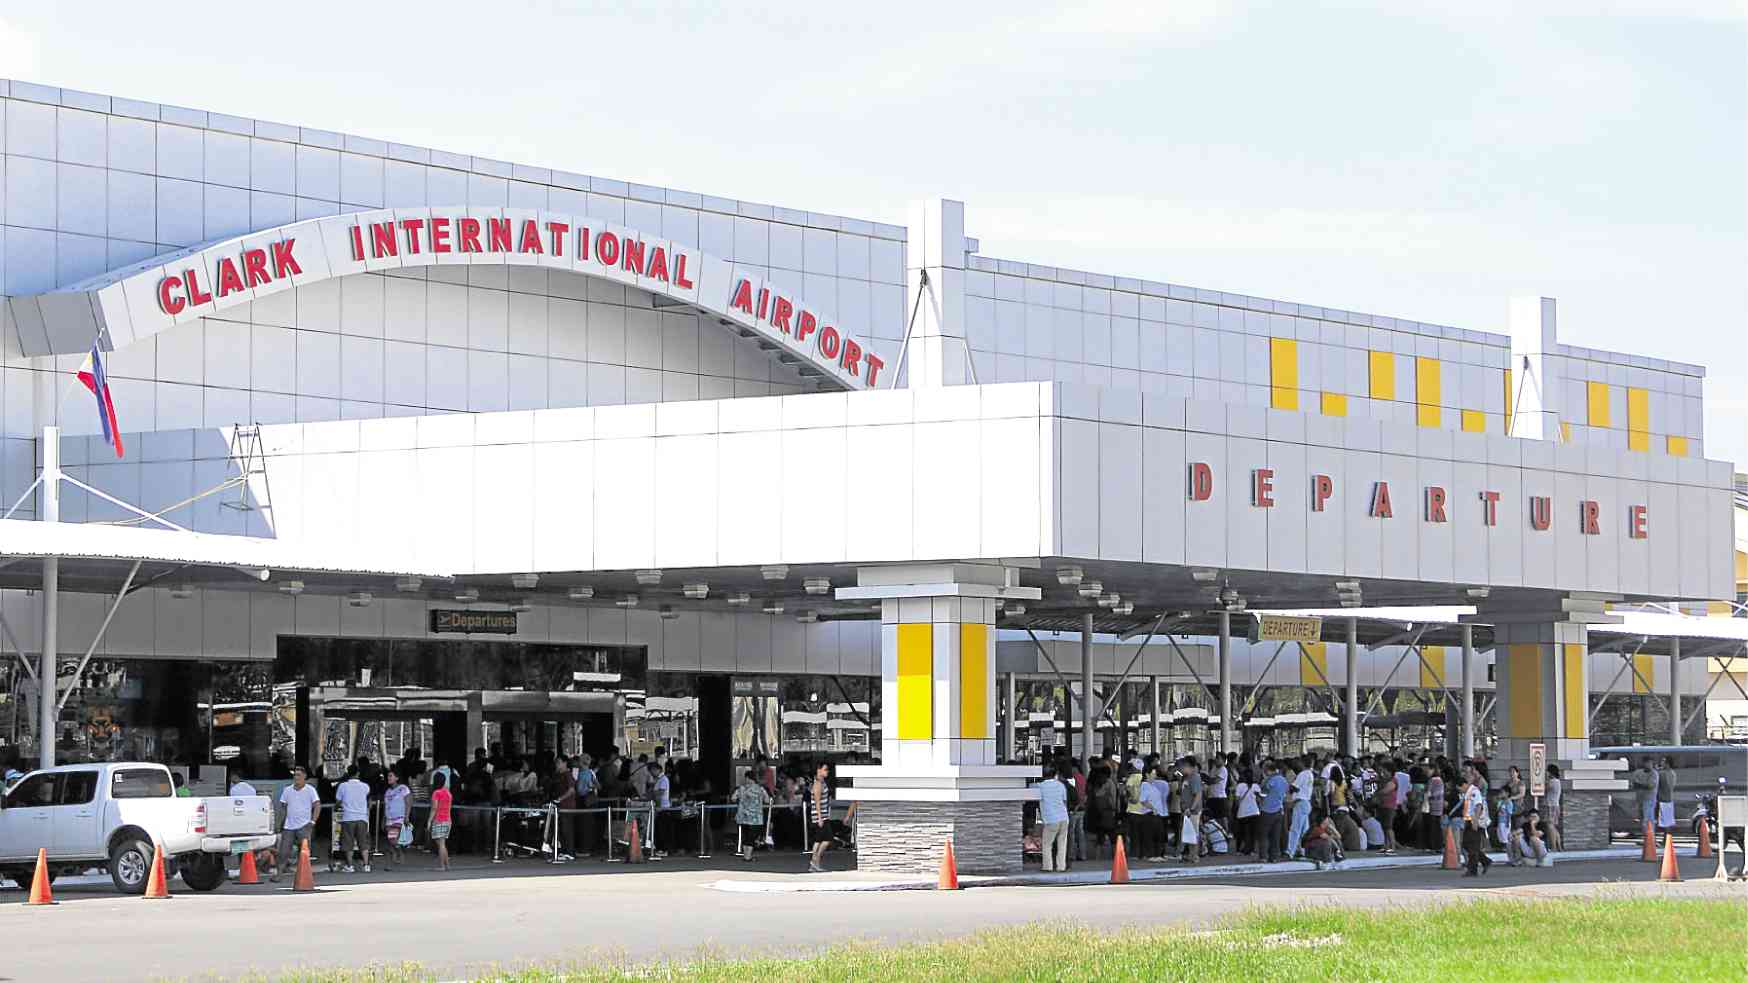 job hiring in clark international airport 2019